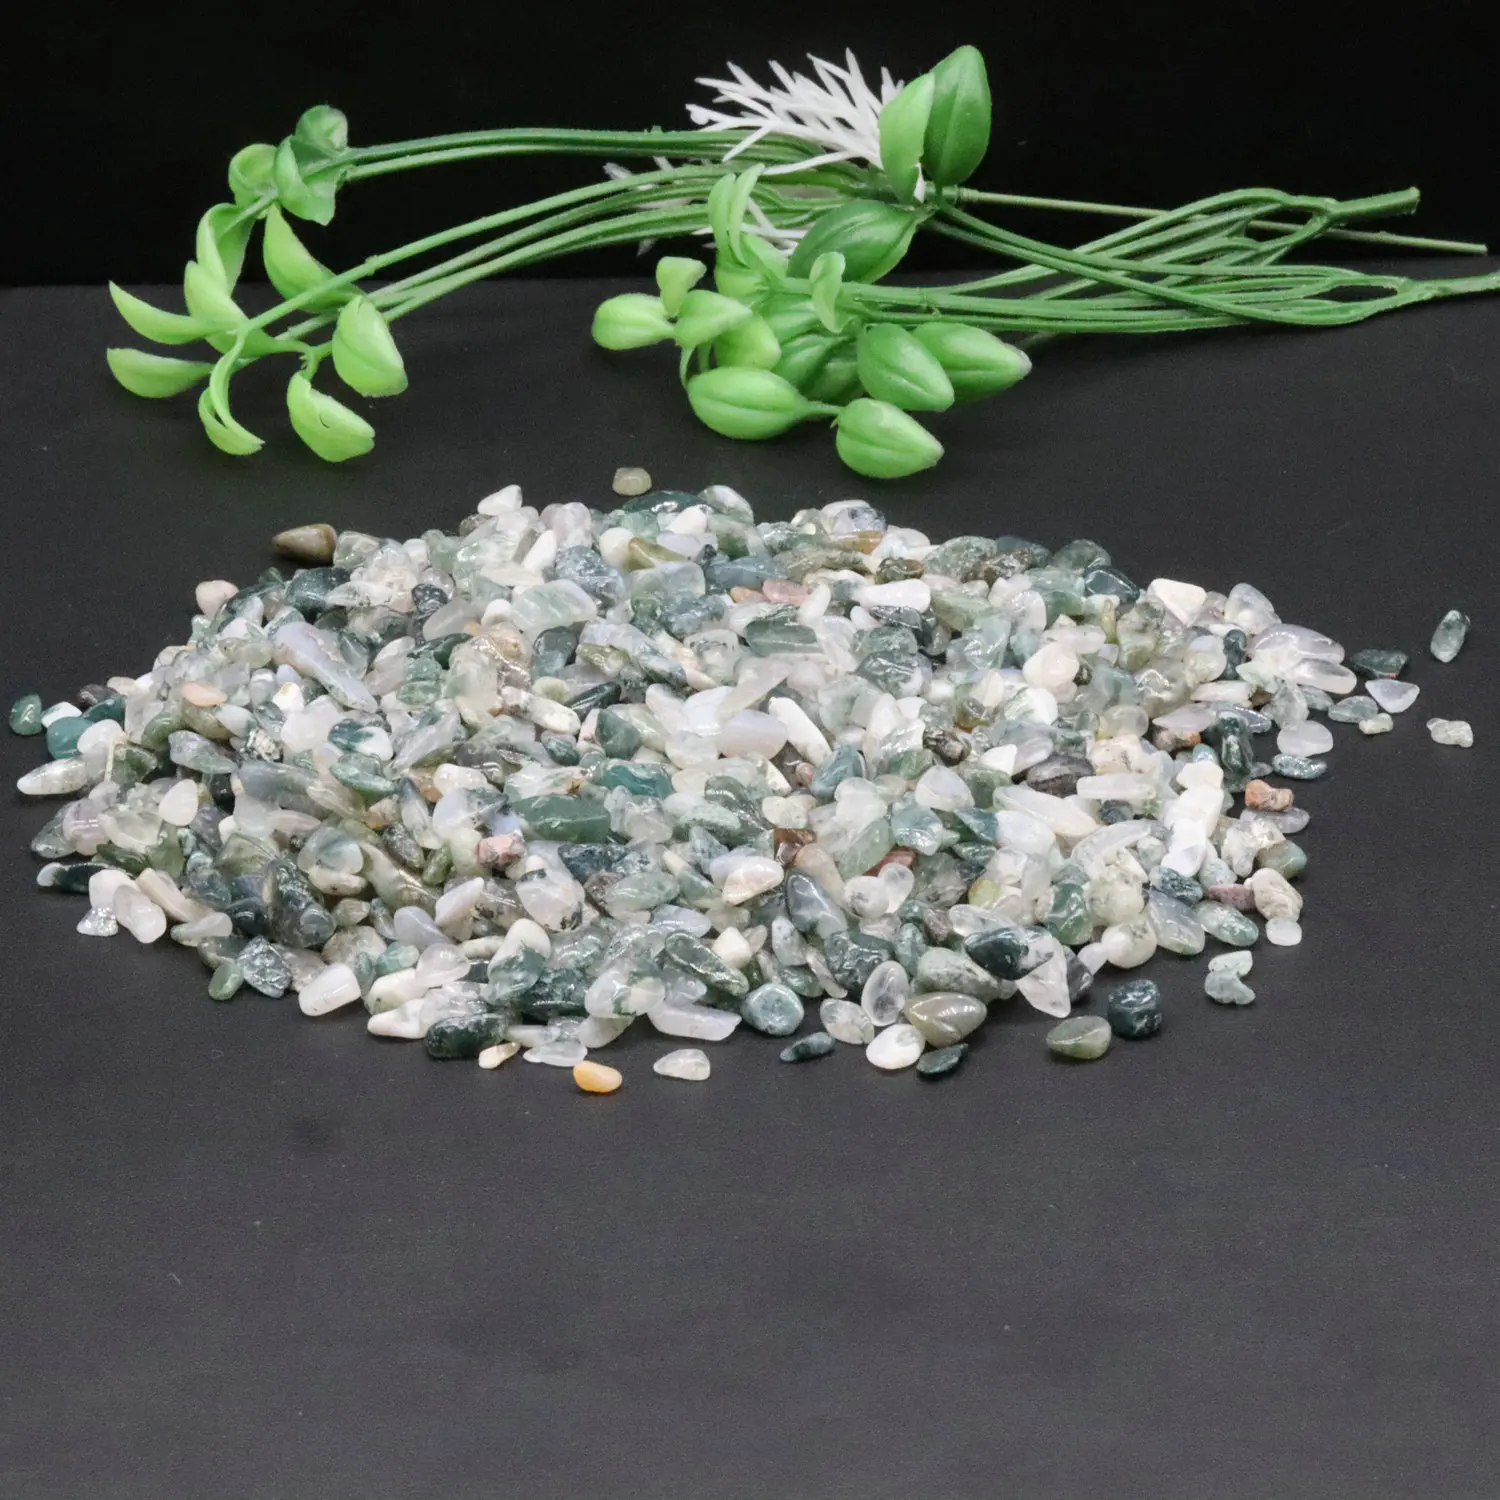 

5-7mm 100g Natural Moss Agate Healing Crystal Jewel Crystal Gravel Polished Raw Gemstone Quartz Rock Gifts